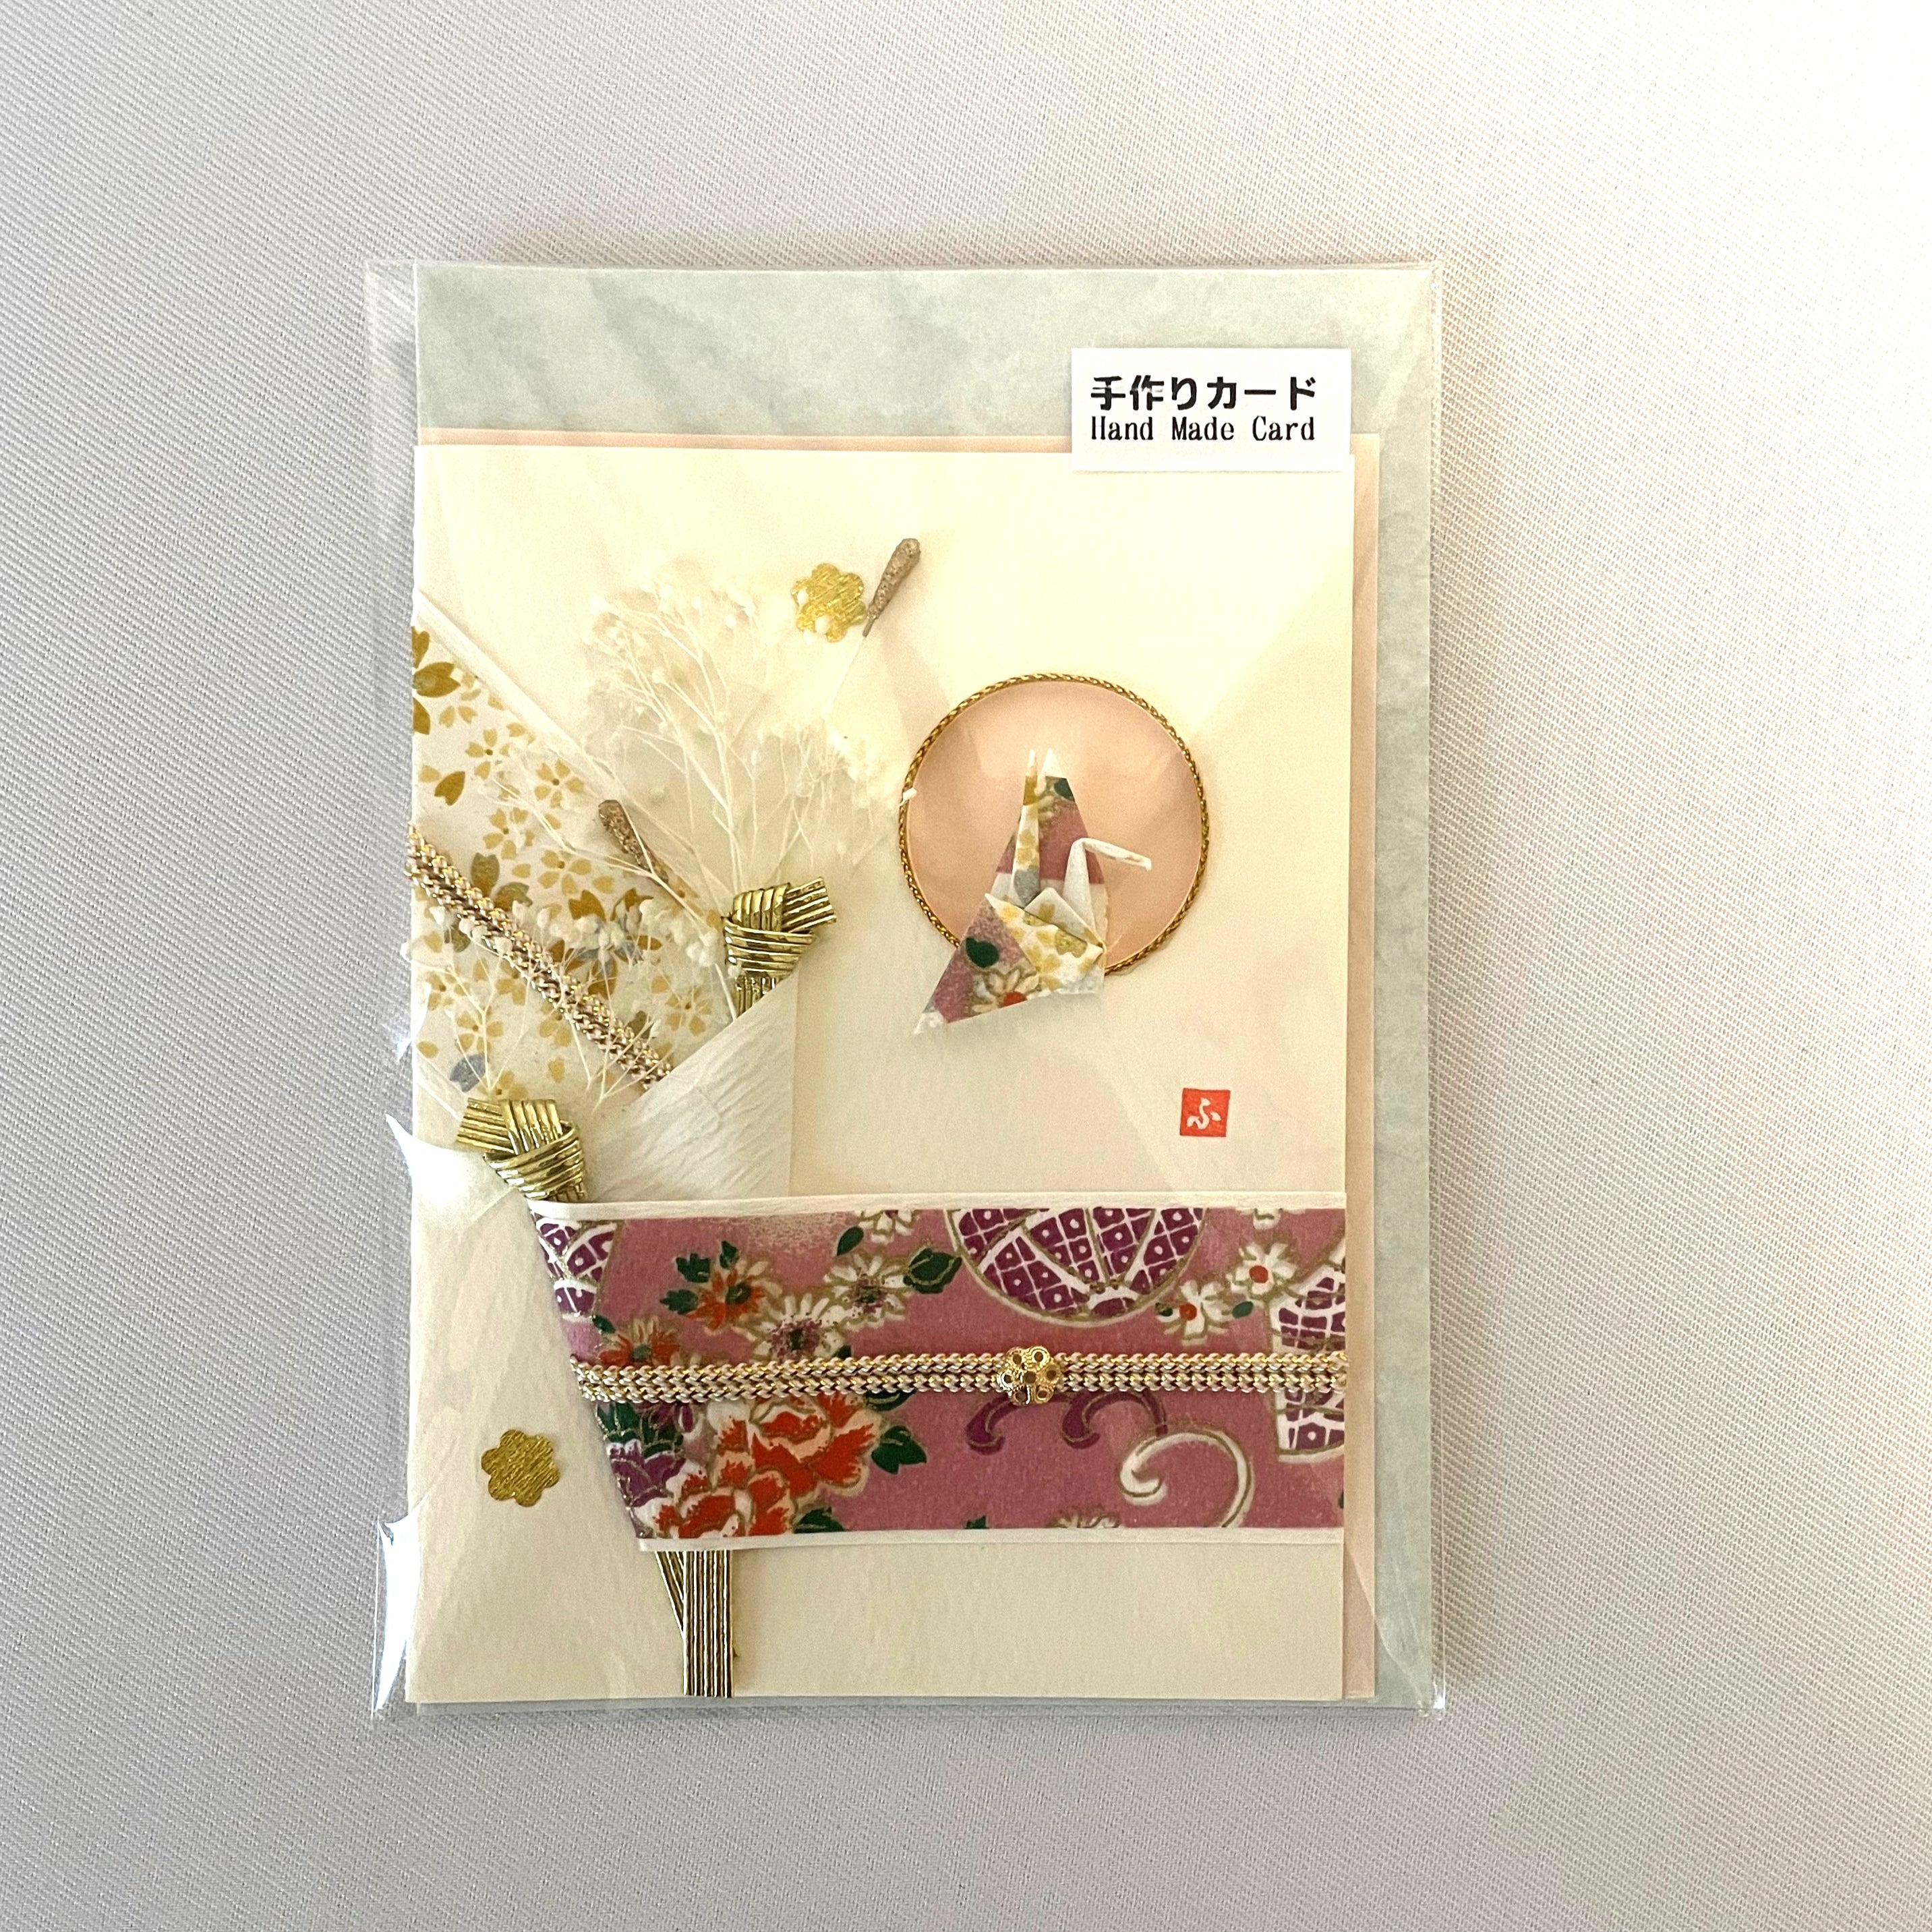 Handmade Greeting Card "Pink Crane"